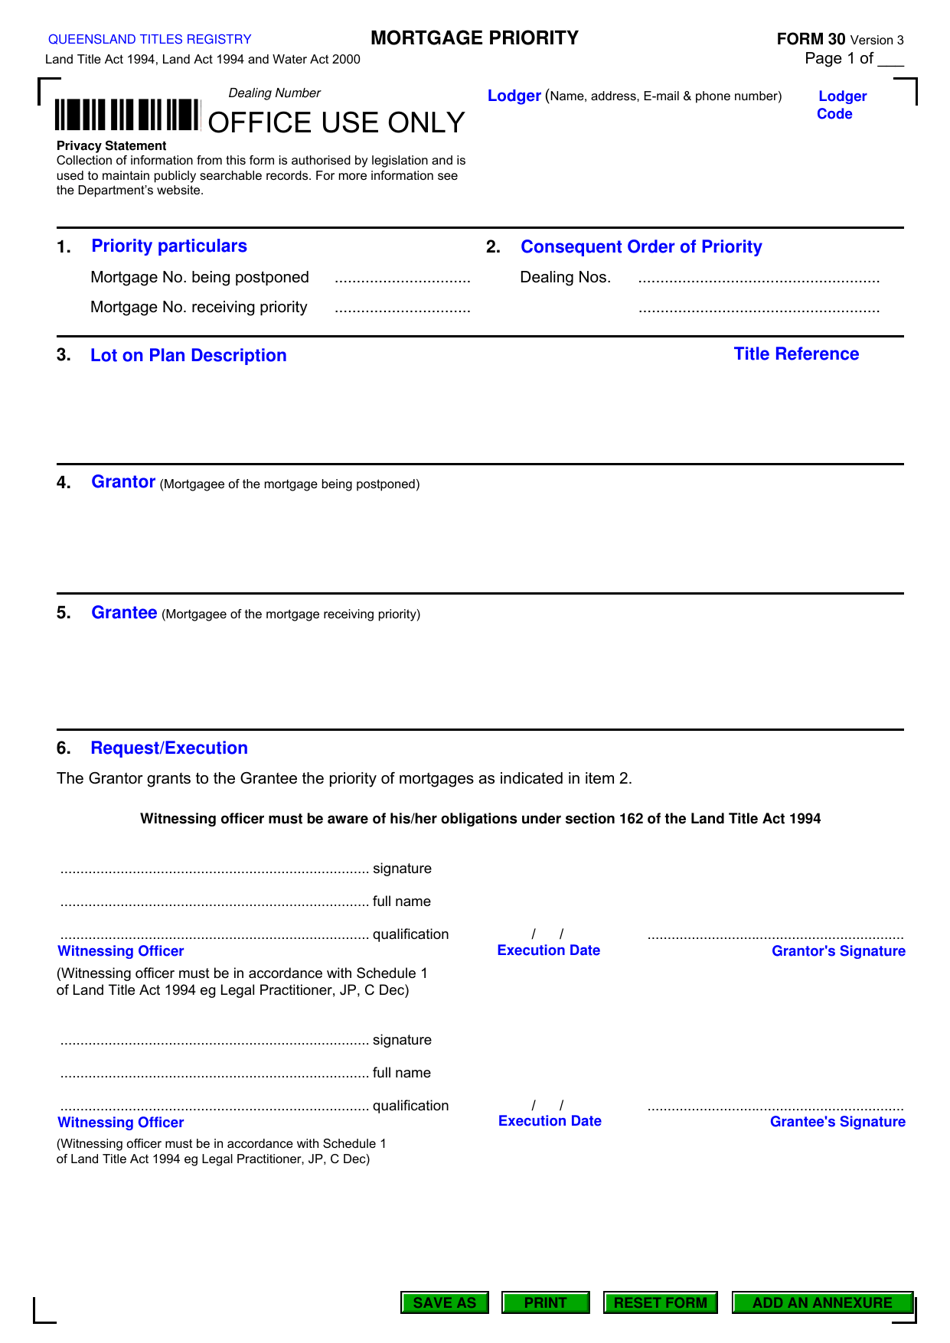 Form 30 Mortgage Priority - Queensland, Australia, Page 1